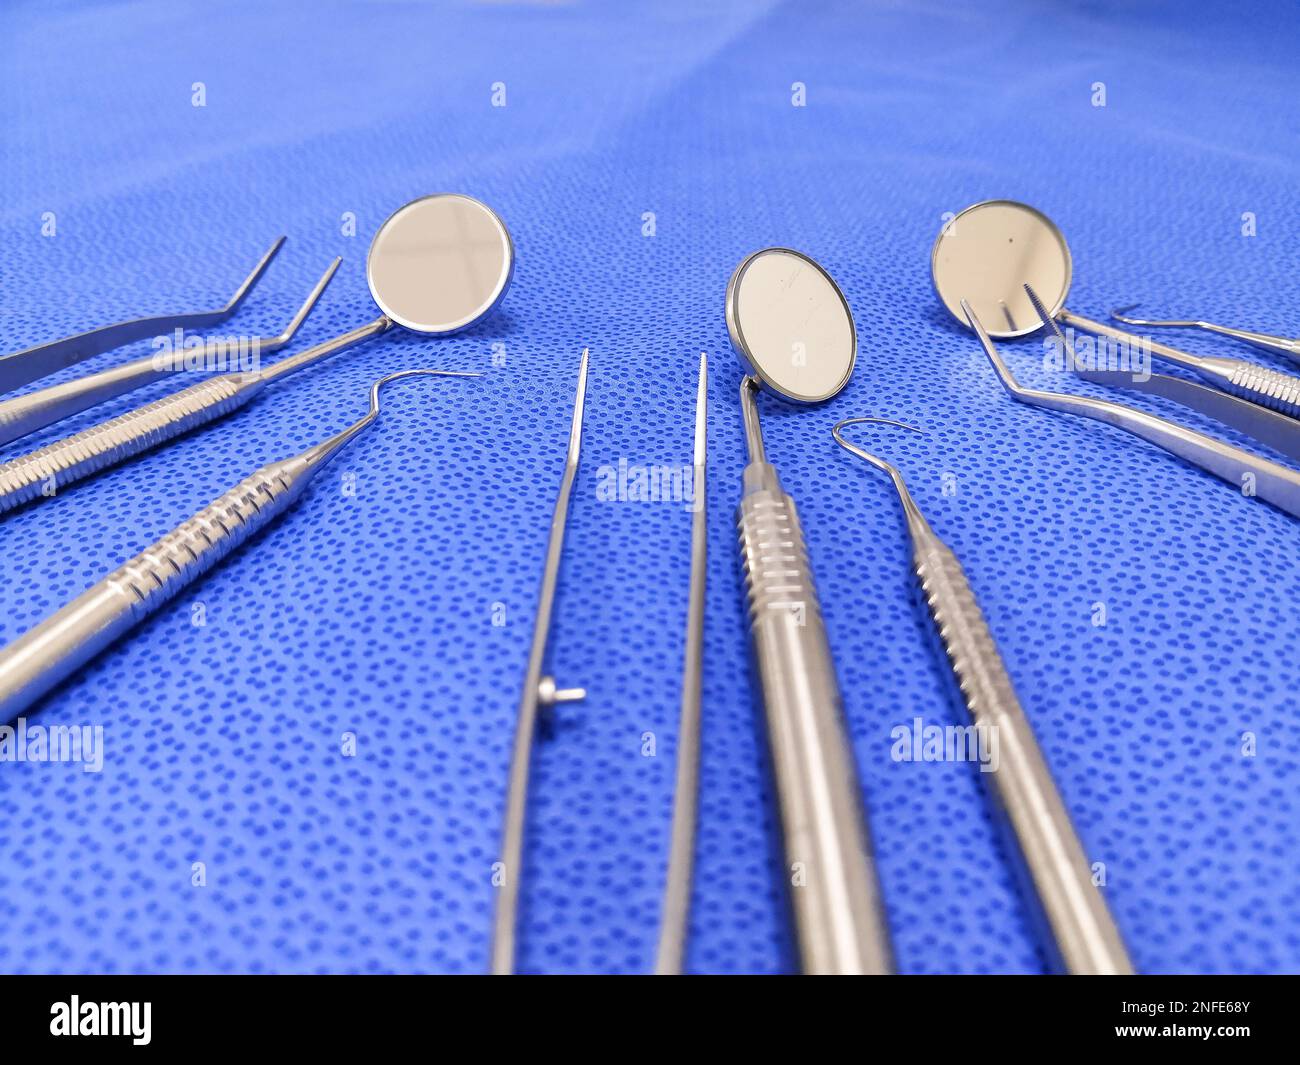 Closeup Image Of Basic Dental Instrument Set Stock Photo